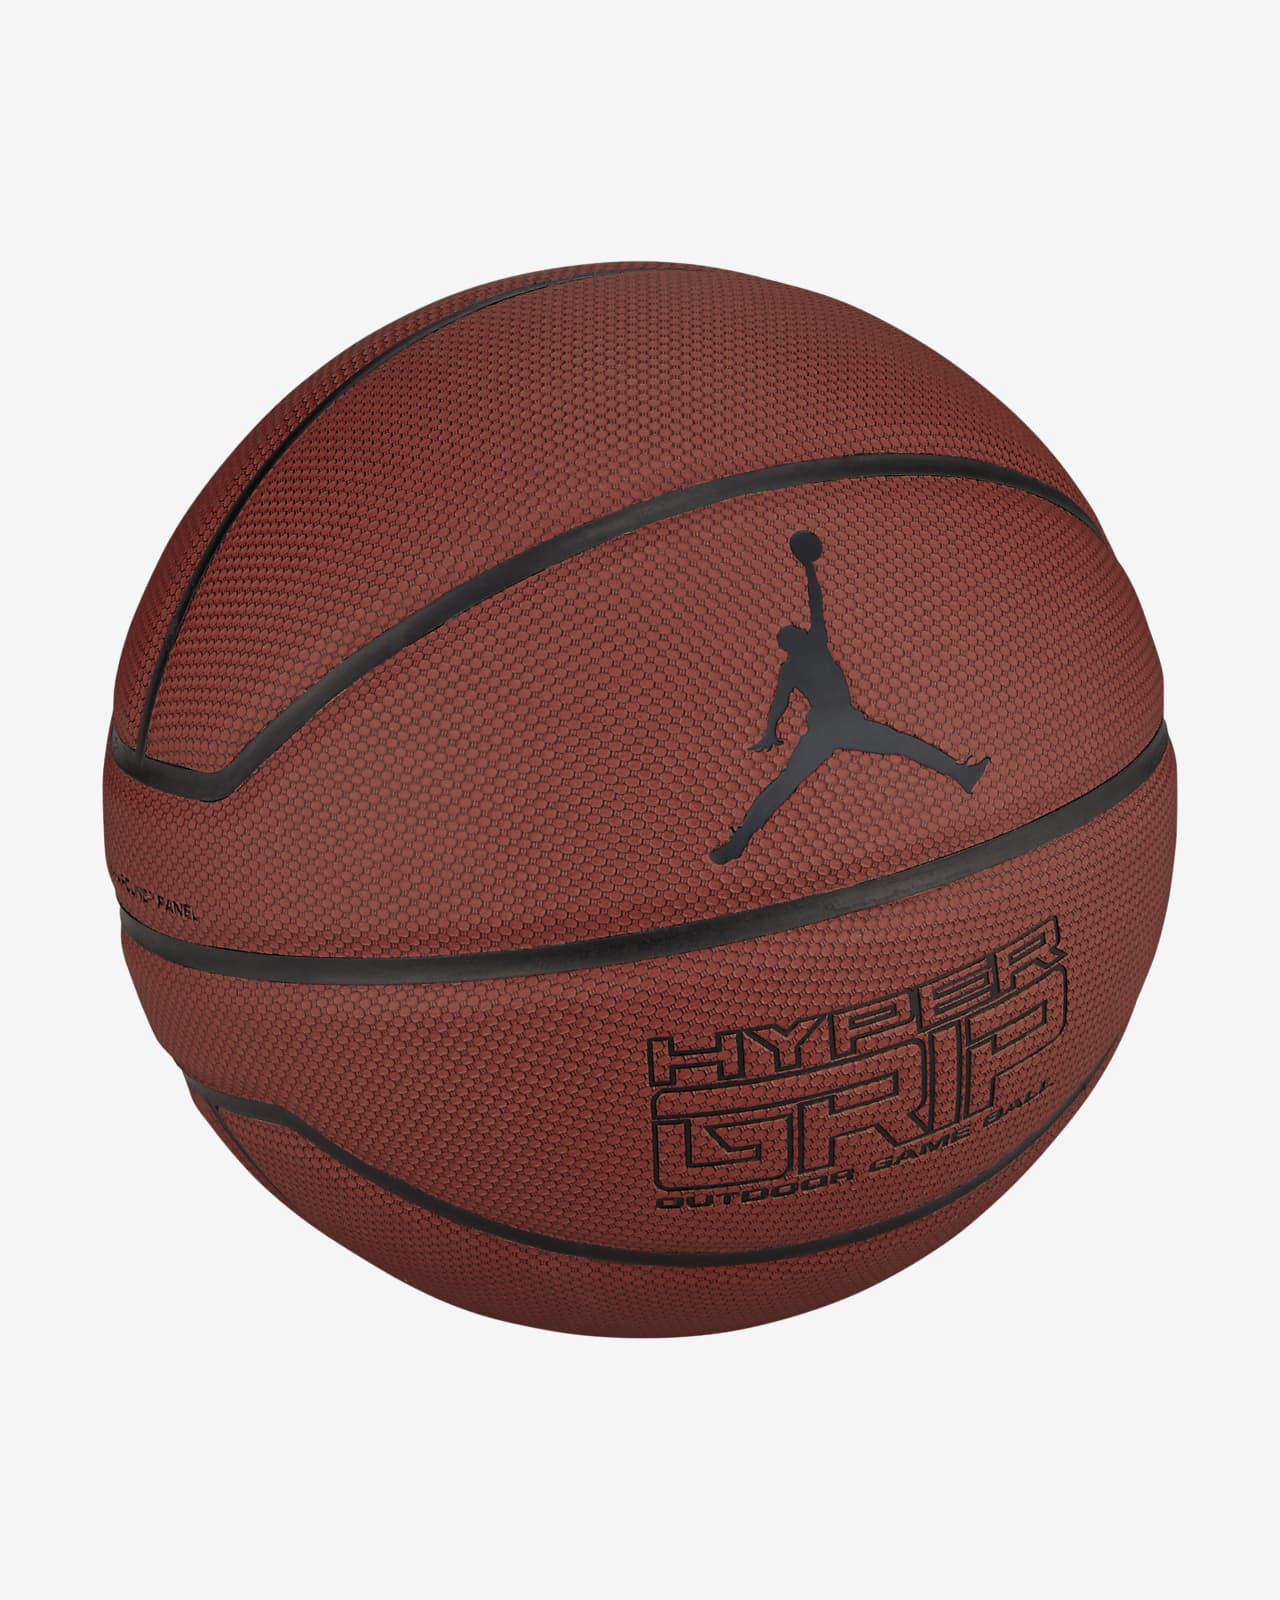 Jordan HyperGrip 4P Basketball (Size 7 